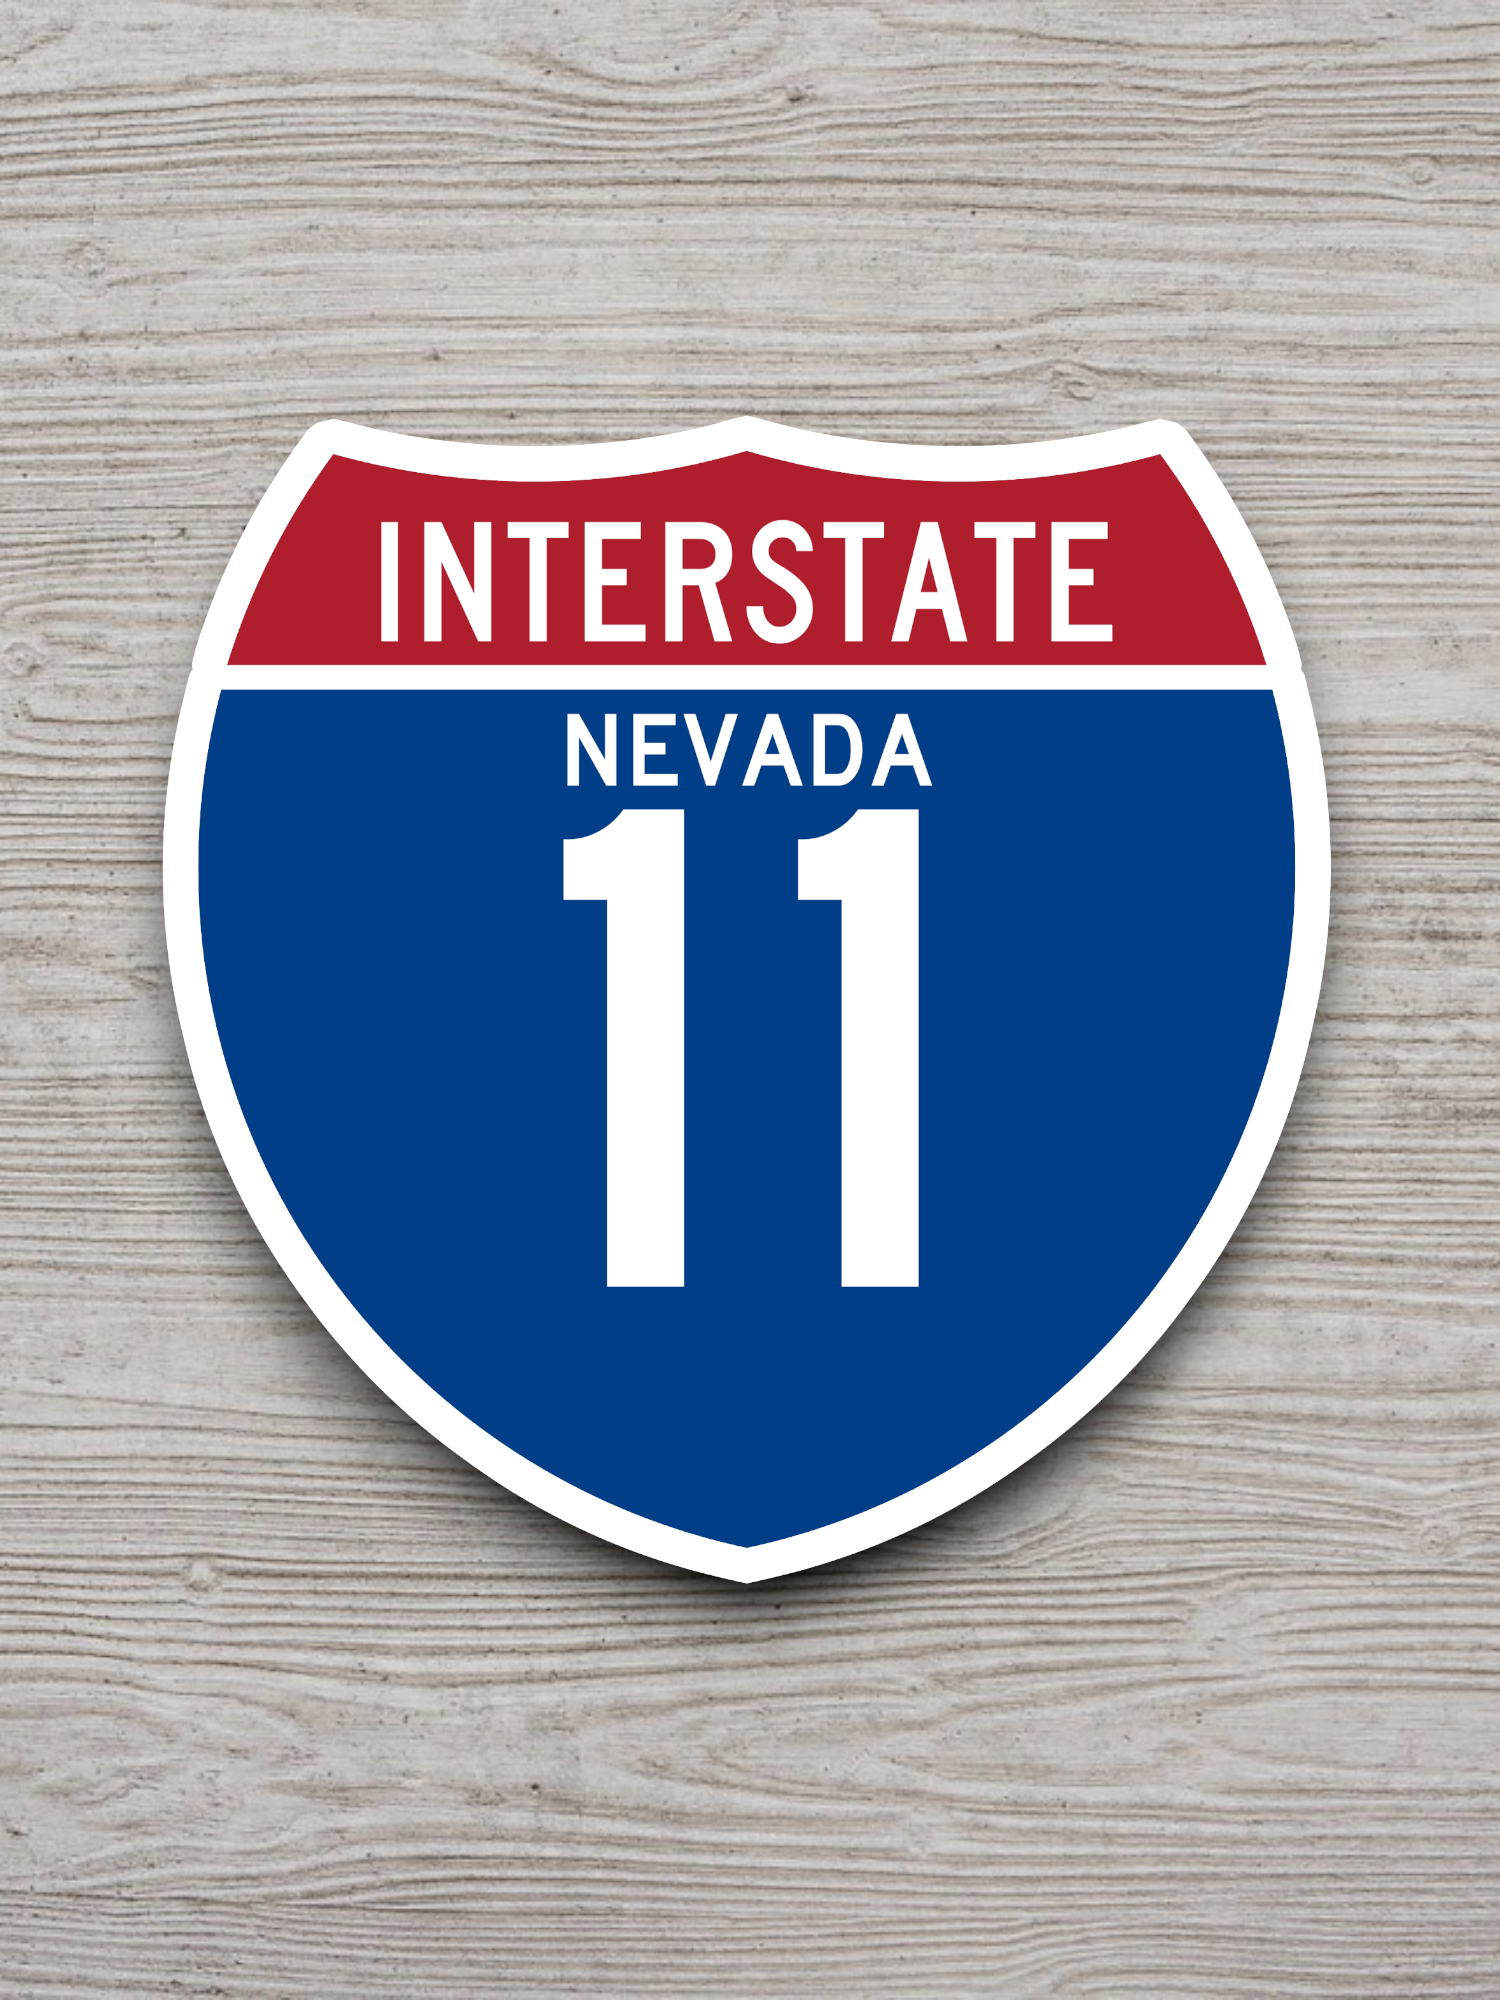 Interstate I-11 Nevada Sticker